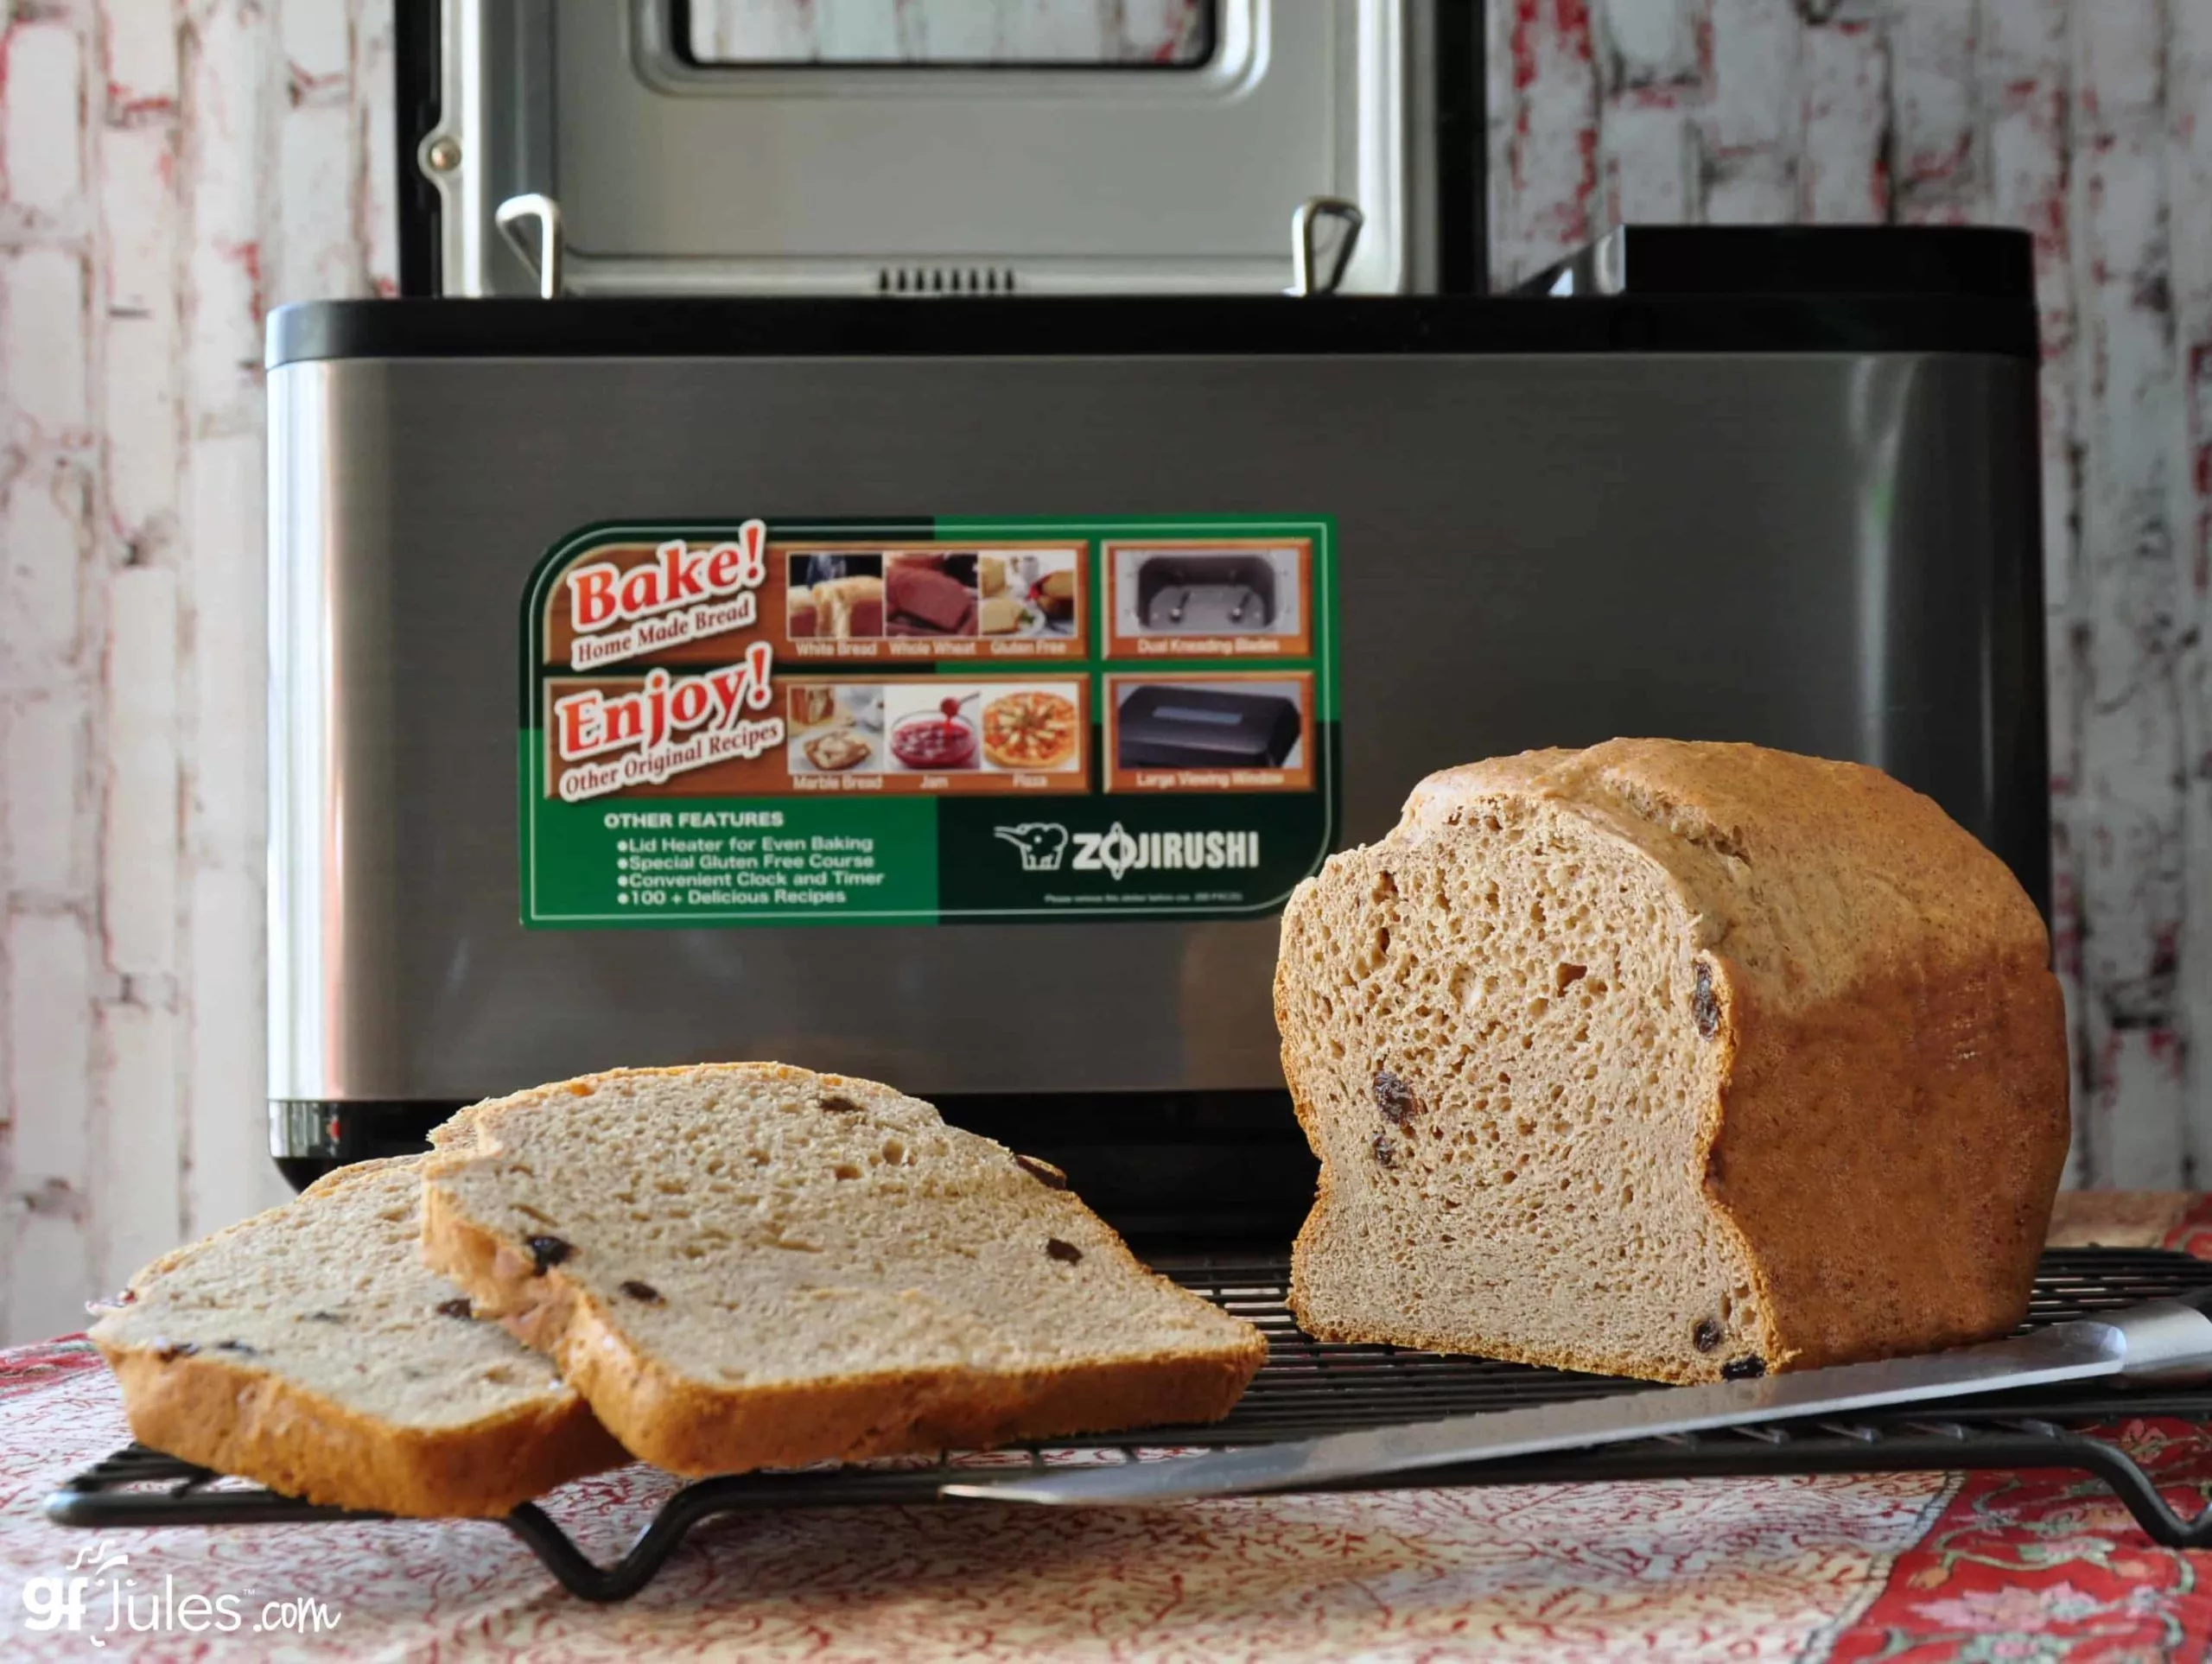 https://gfjules.com/wp-content/uploads/2014/02/zojirushi-GF-cinnamon-raisin-bread-gfJules-scaled.jpg